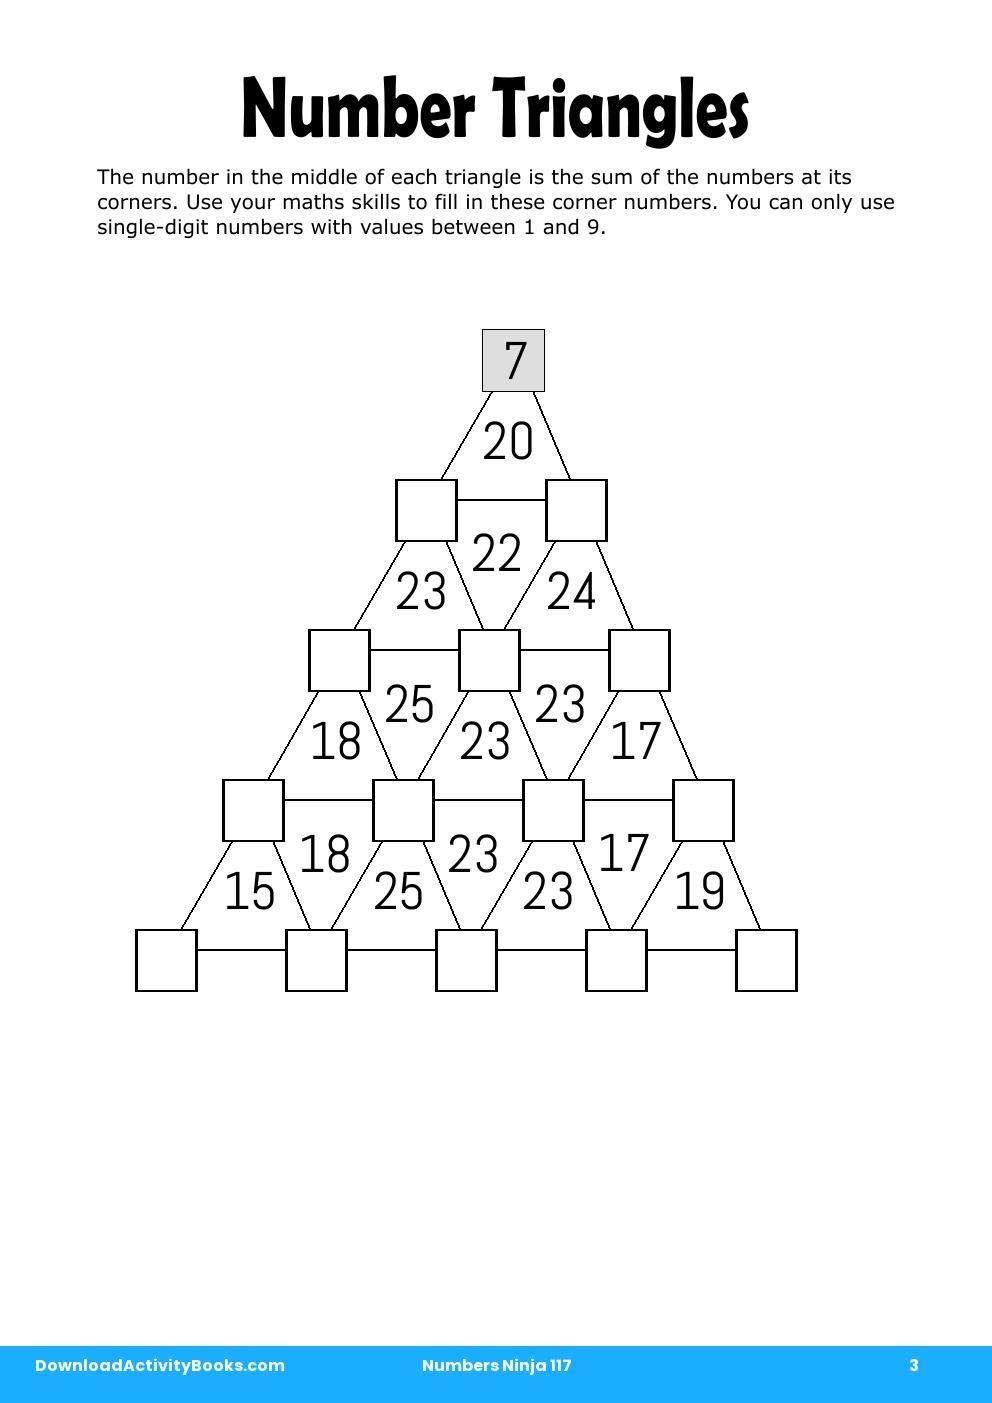 Number Triangles in Numbers Ninja 117